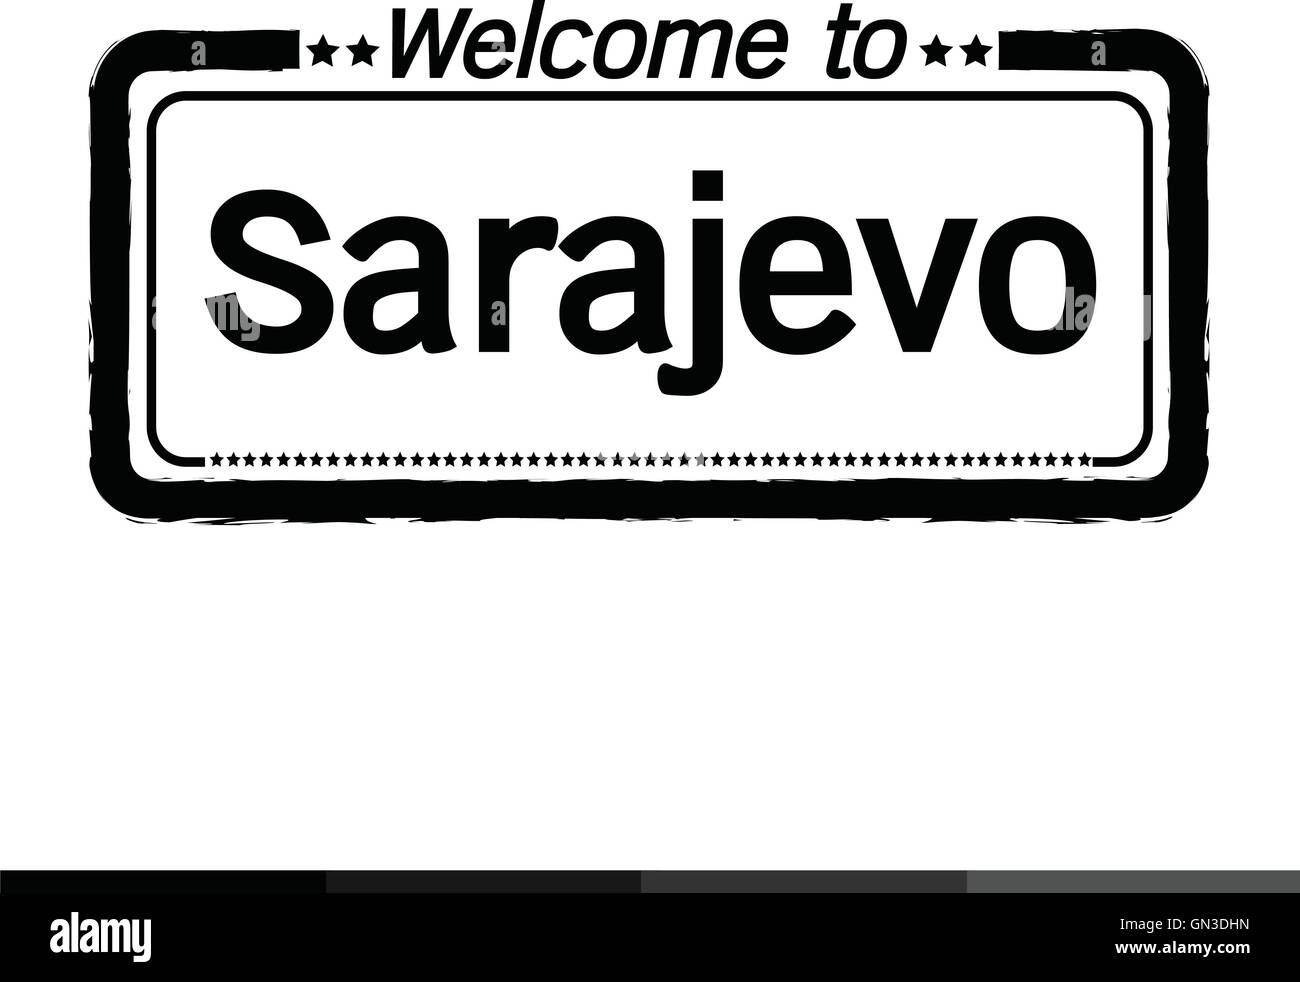 Welcome to Sarajevo city illustration design Stock Vector